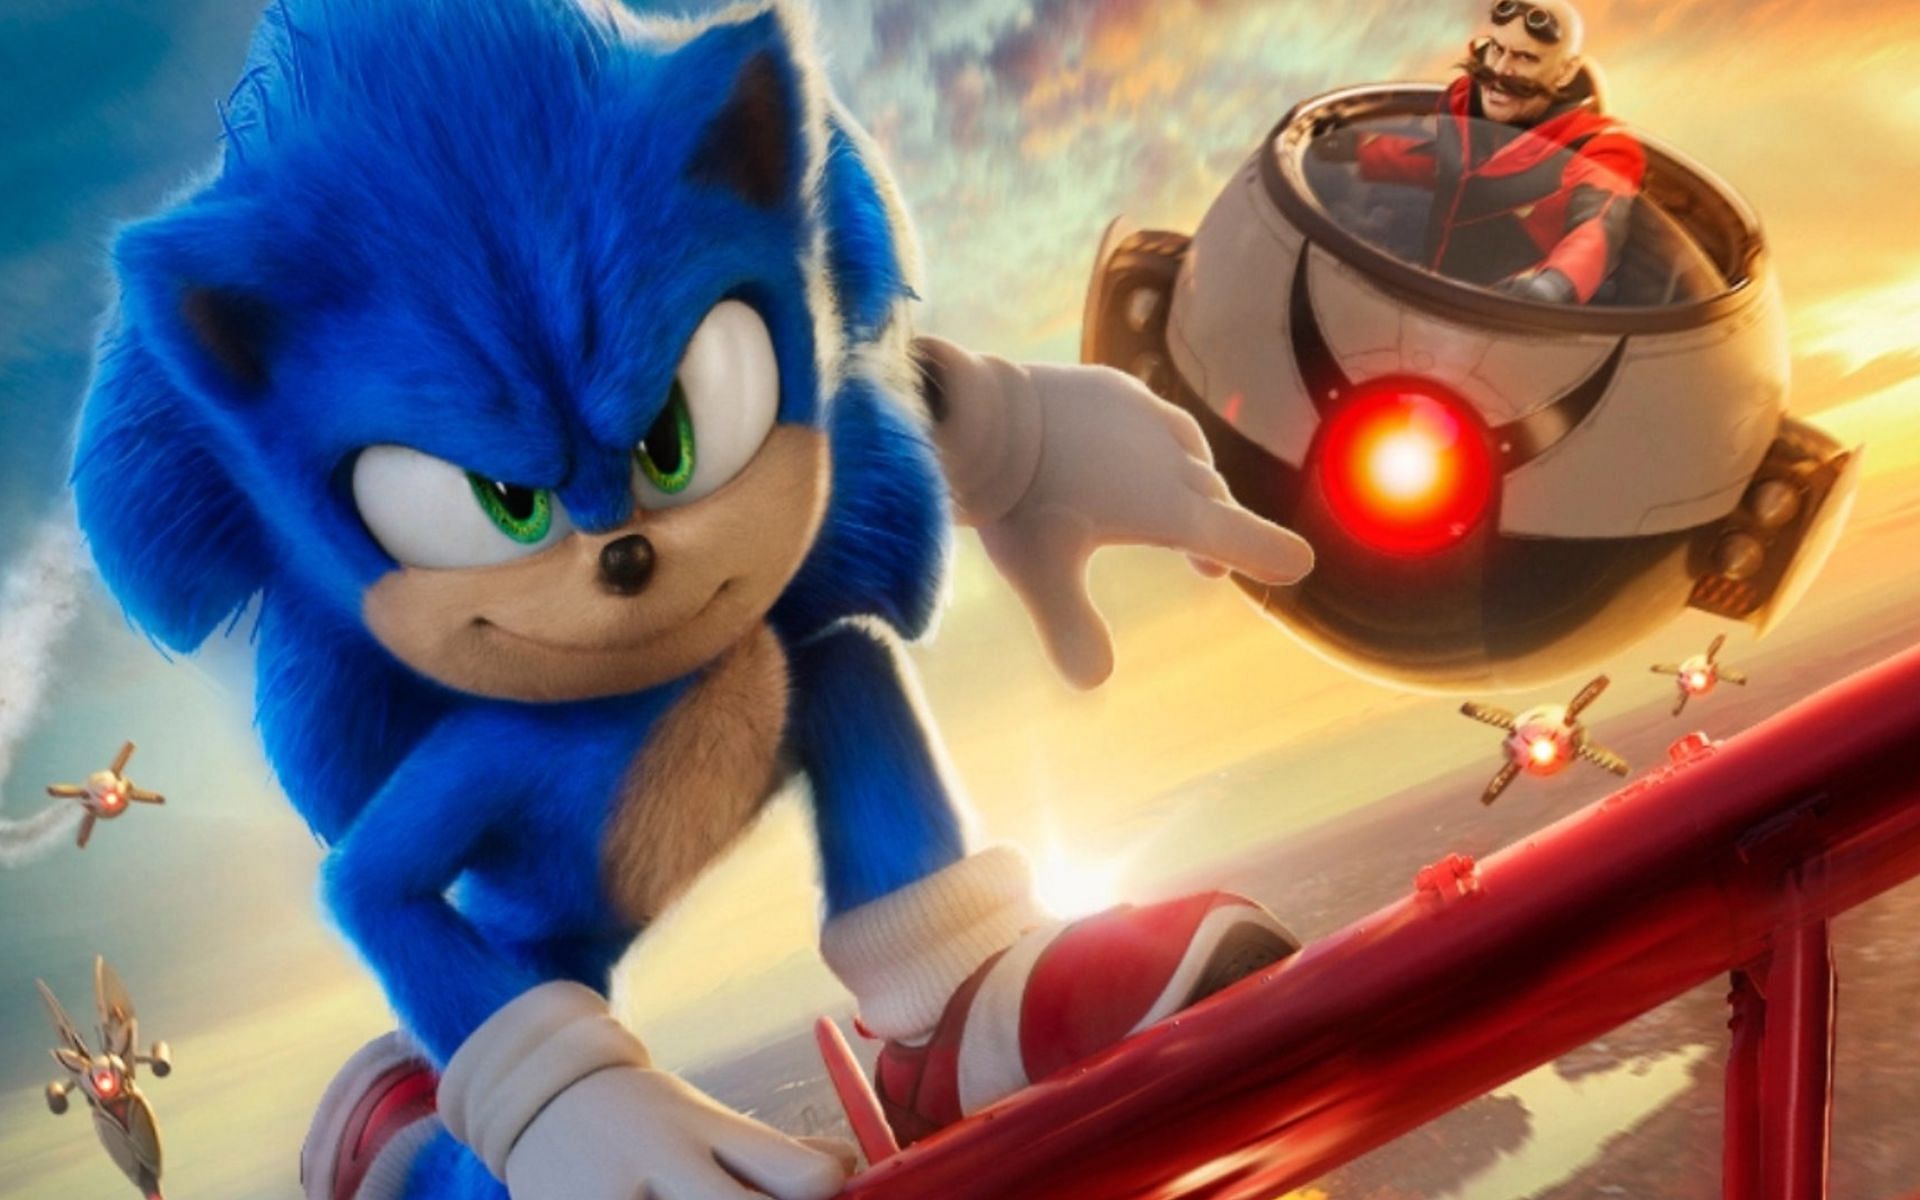 Sonic the Hedgehog 2 is now running in theaters worldwide. (Image via IMDb)